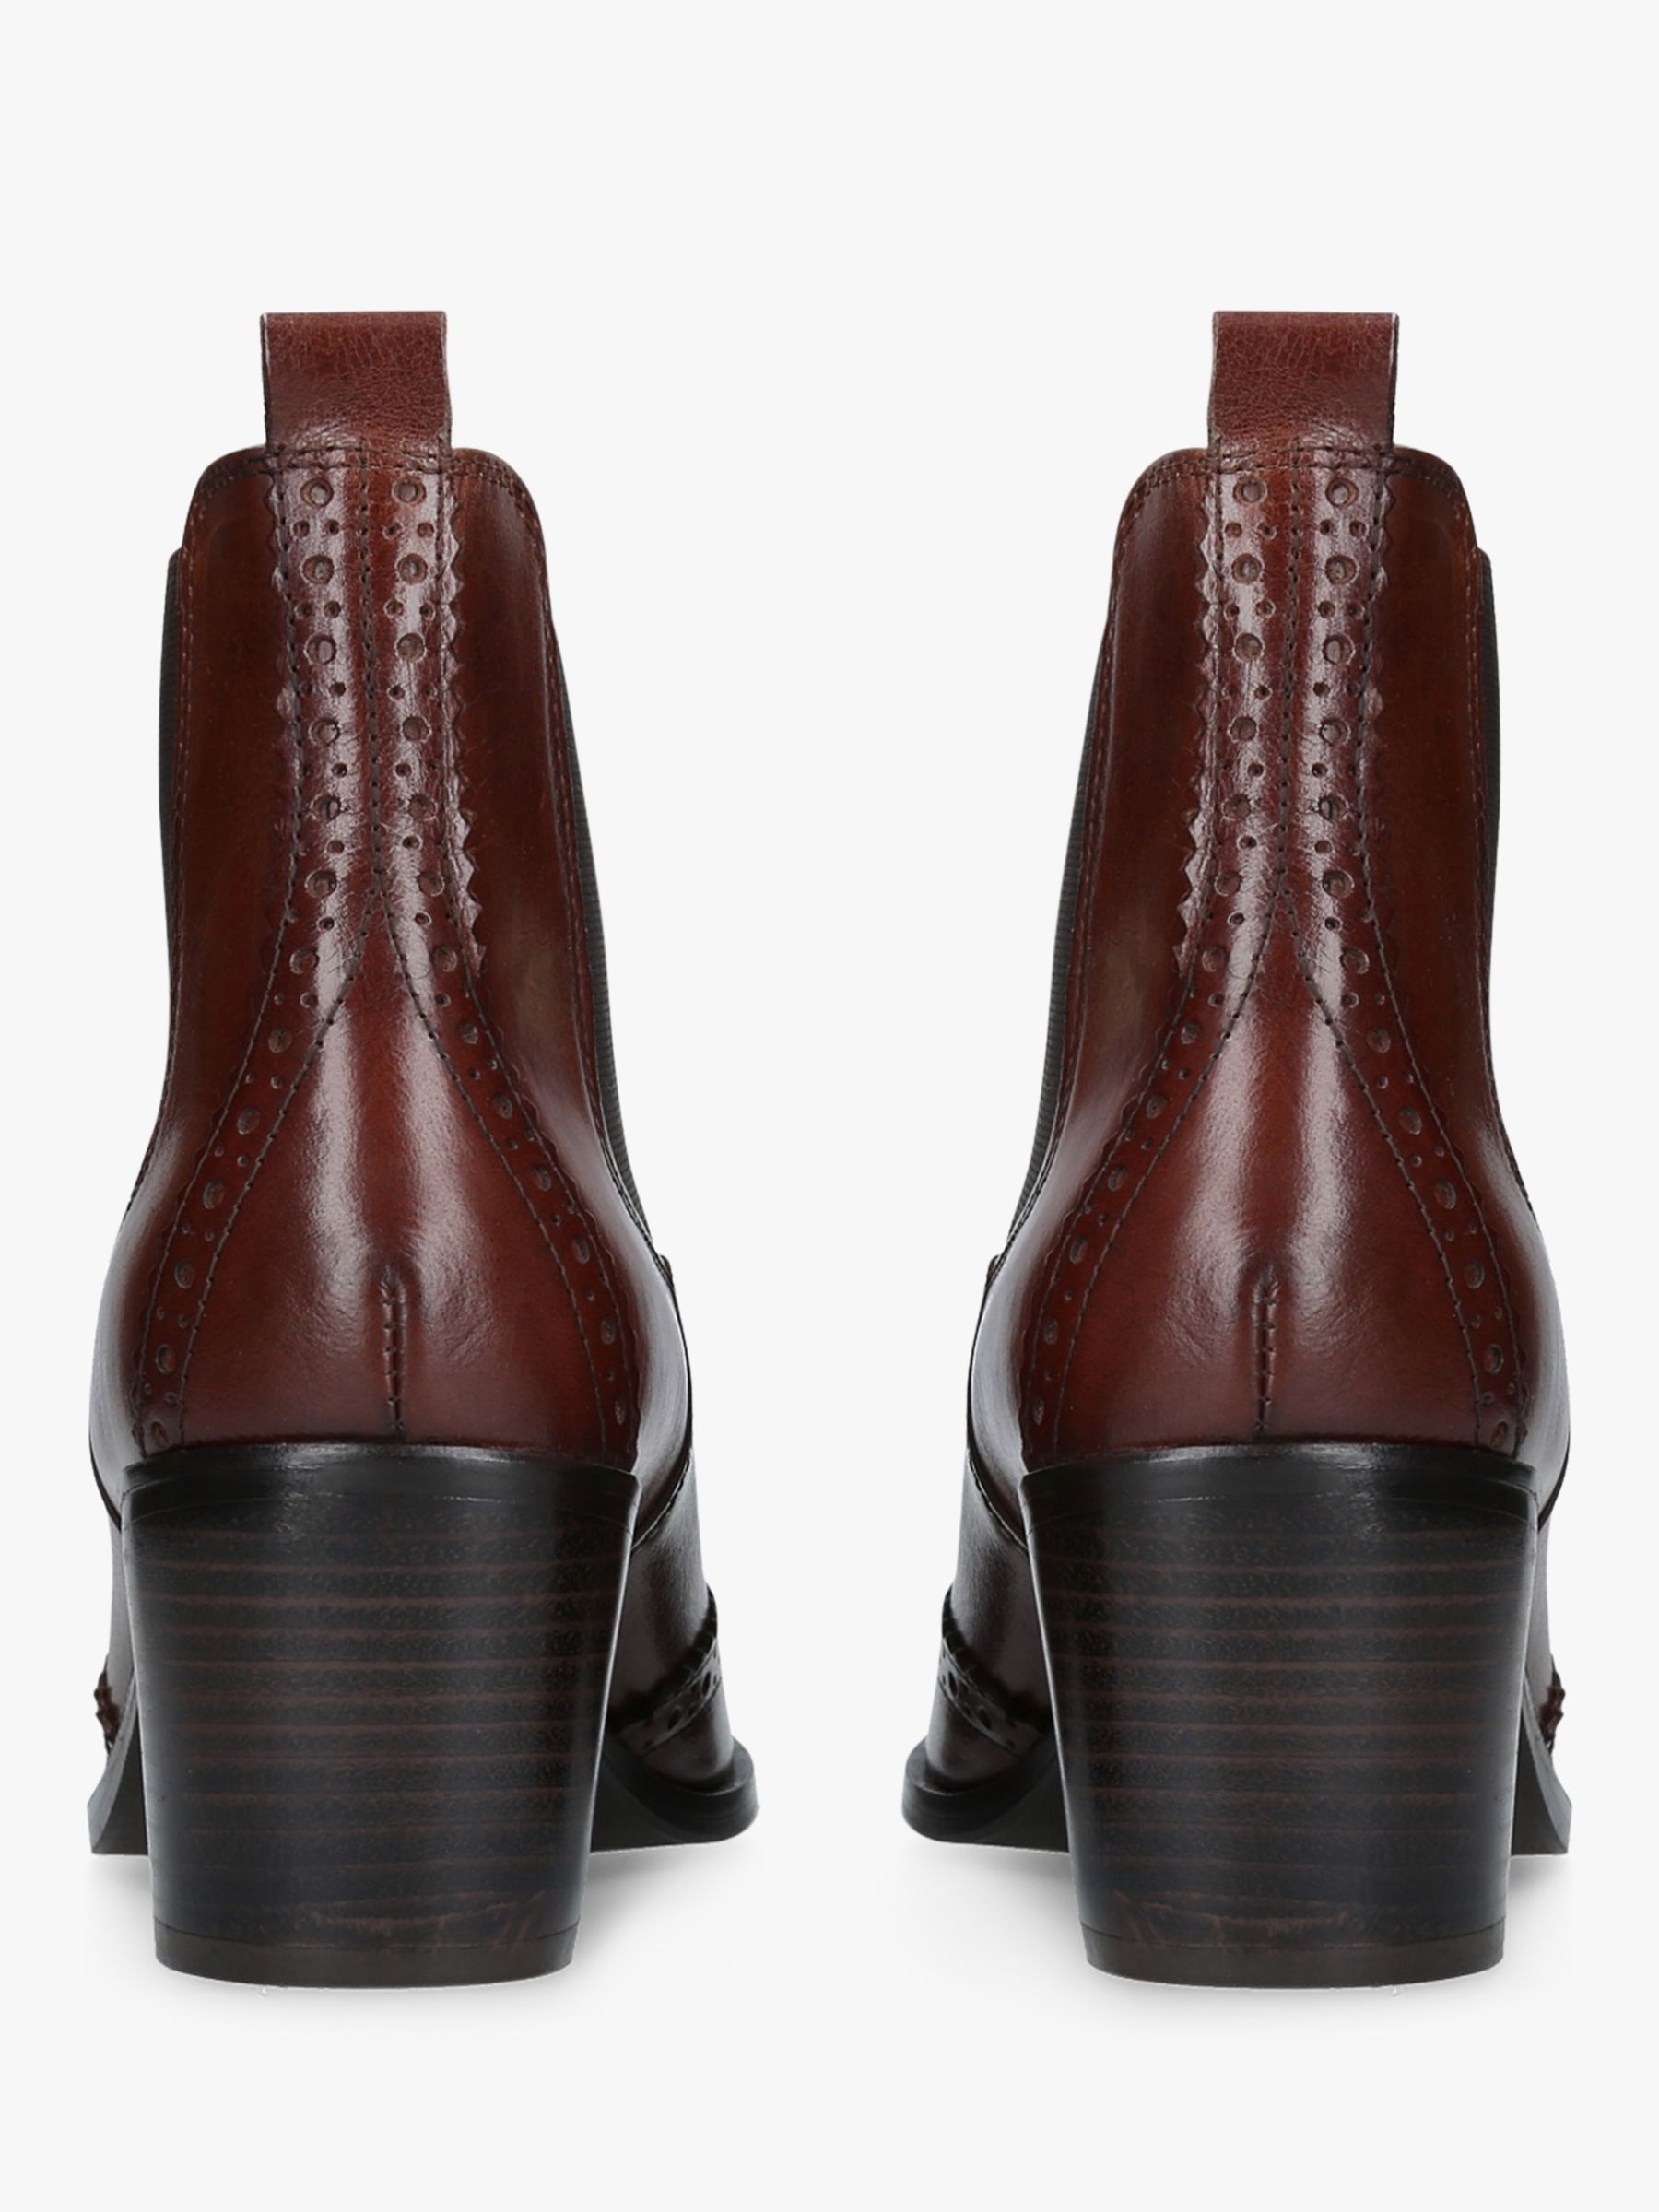 Carvela Shake Block Heel Ankle Boots, Tan Leather at John Lewis & Partners